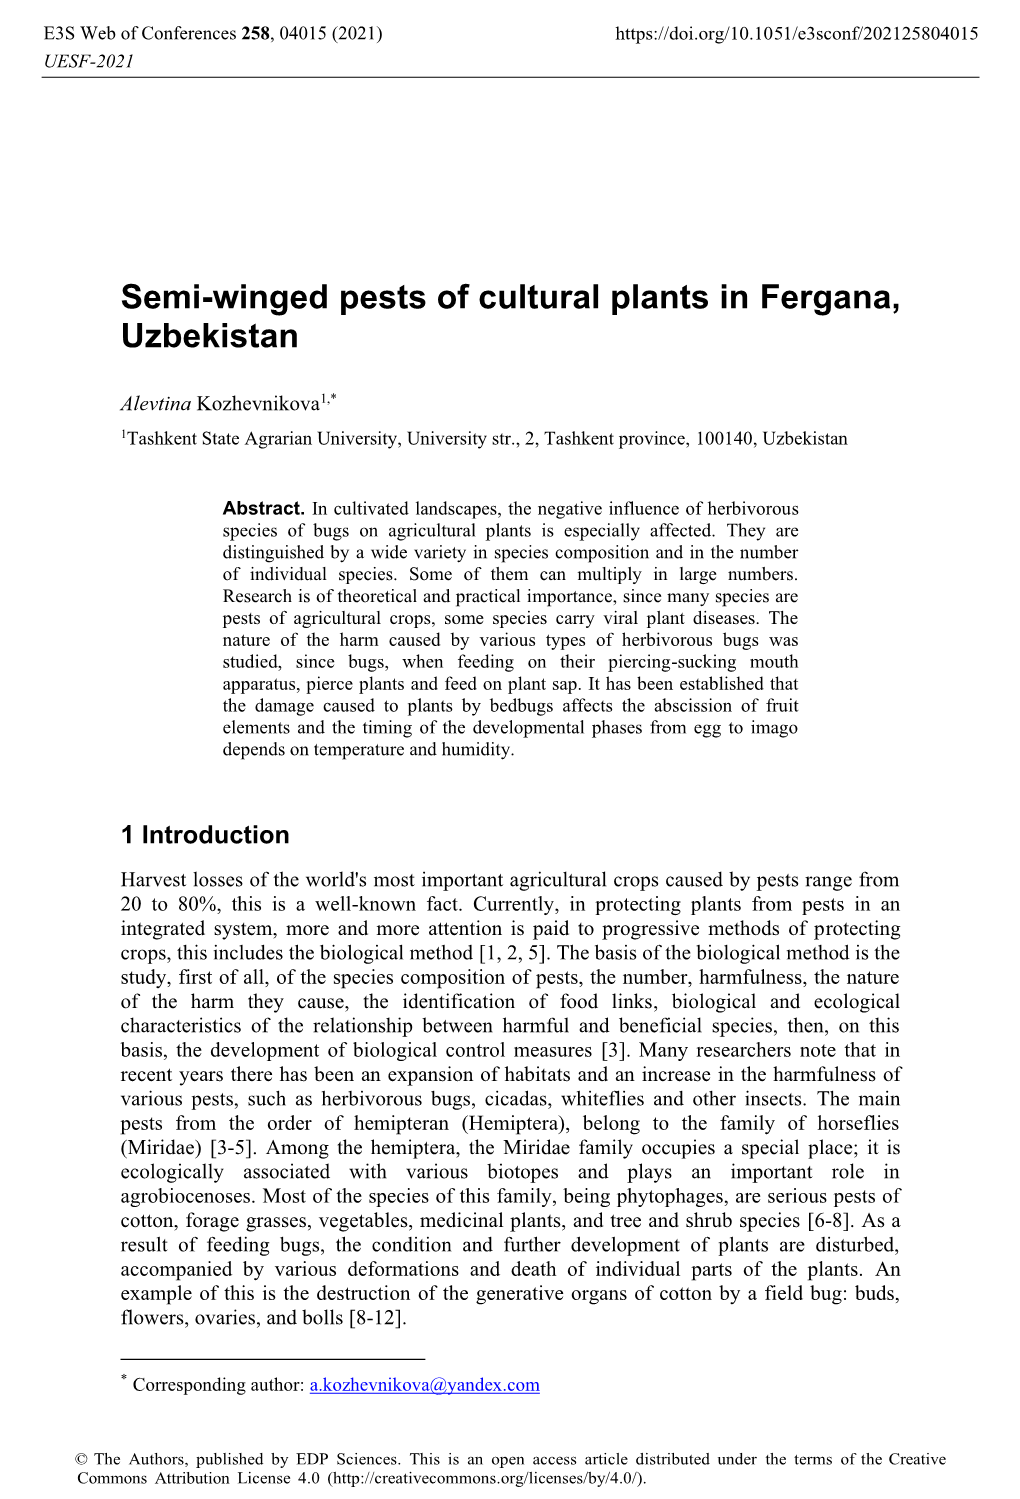 Semi-Winged Pests of Cultural Plants in Fergana, Uzbekistan